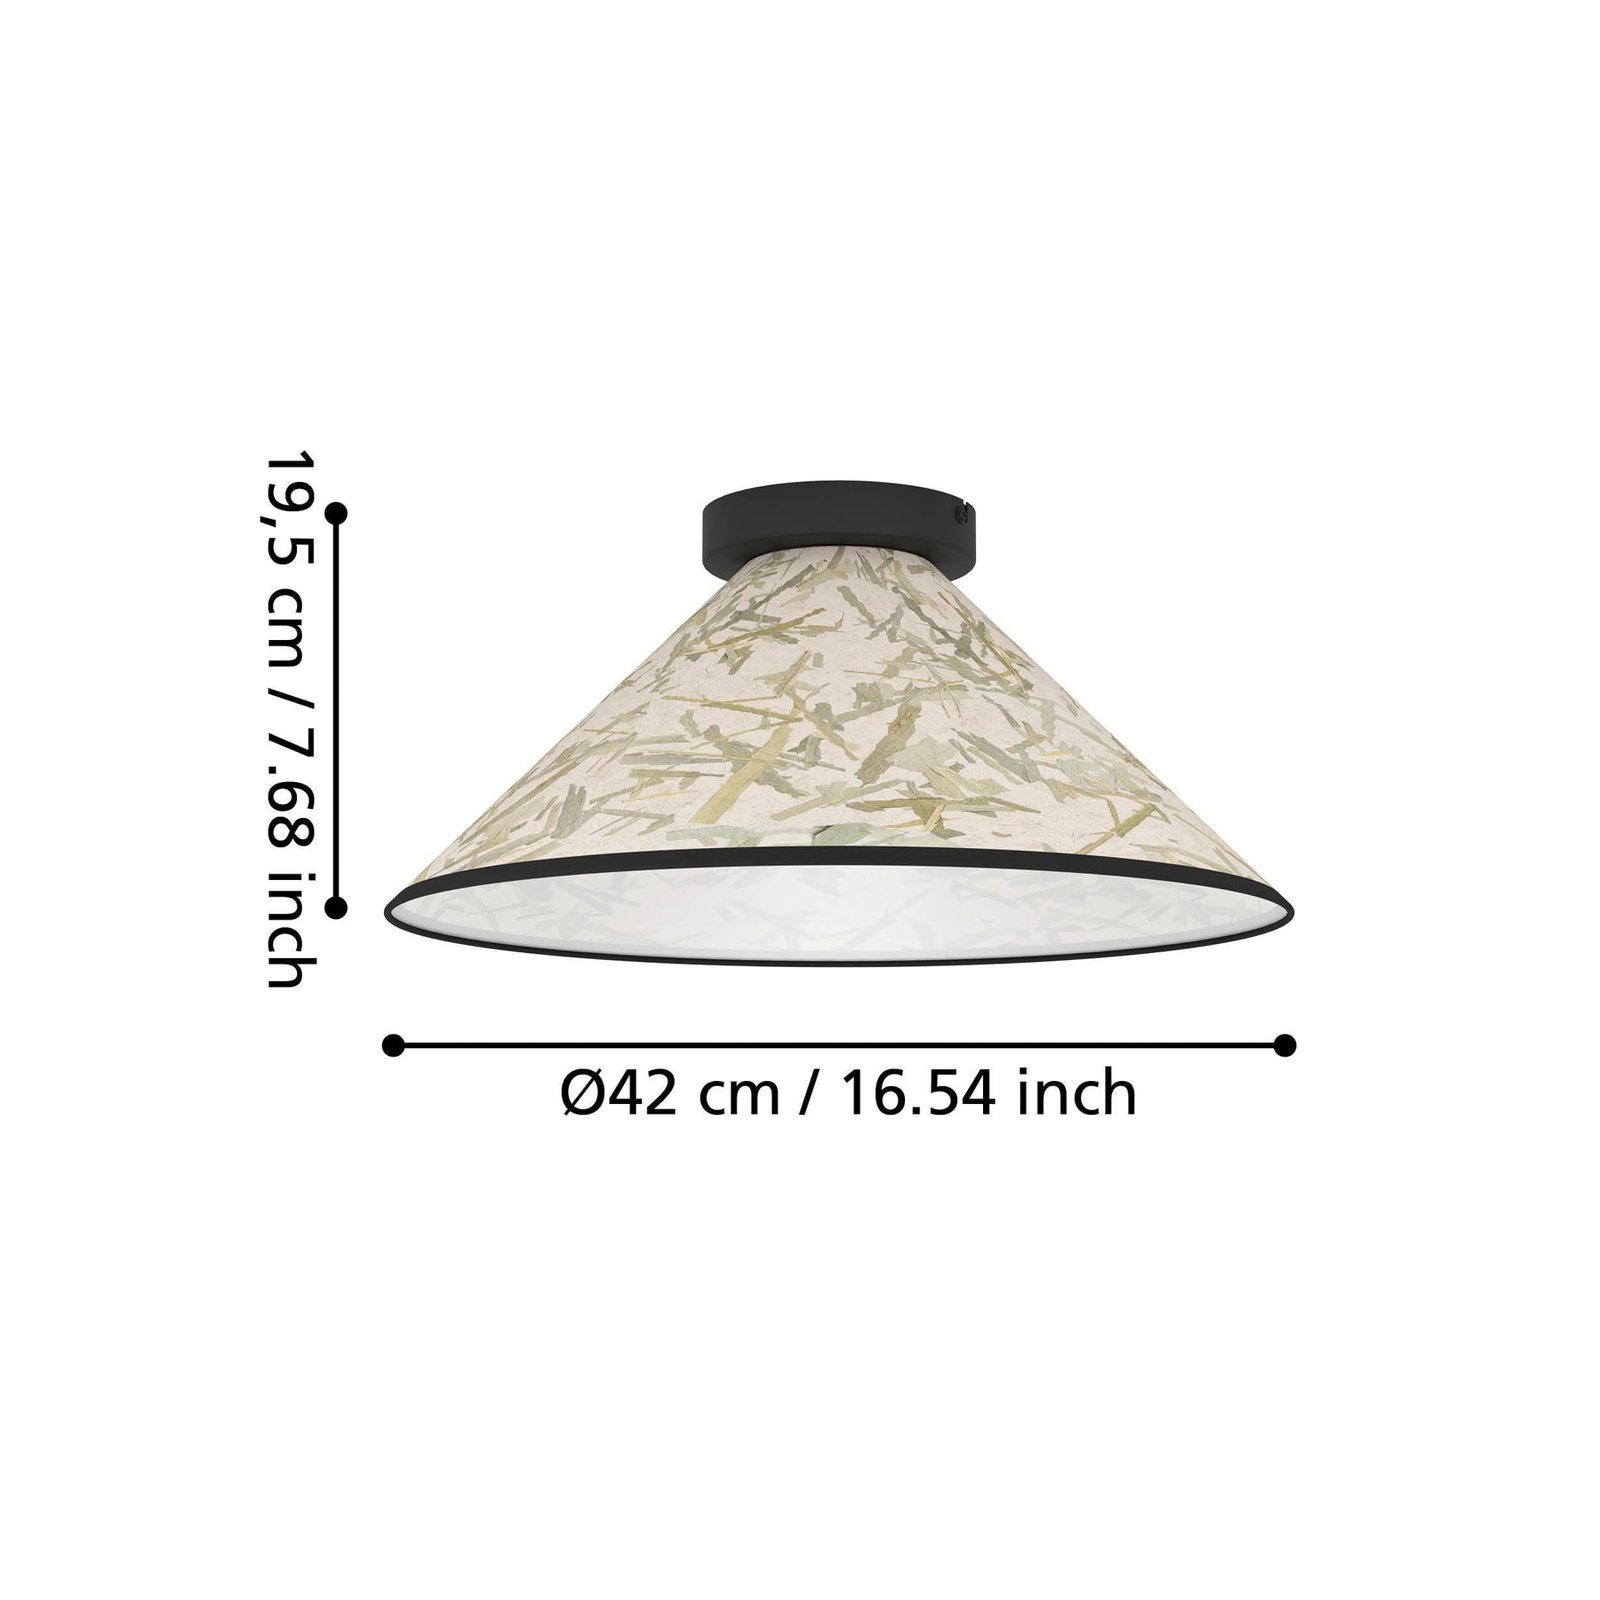 Oxpark ceiling light, Ø 42 cm, green/white/black, fabric